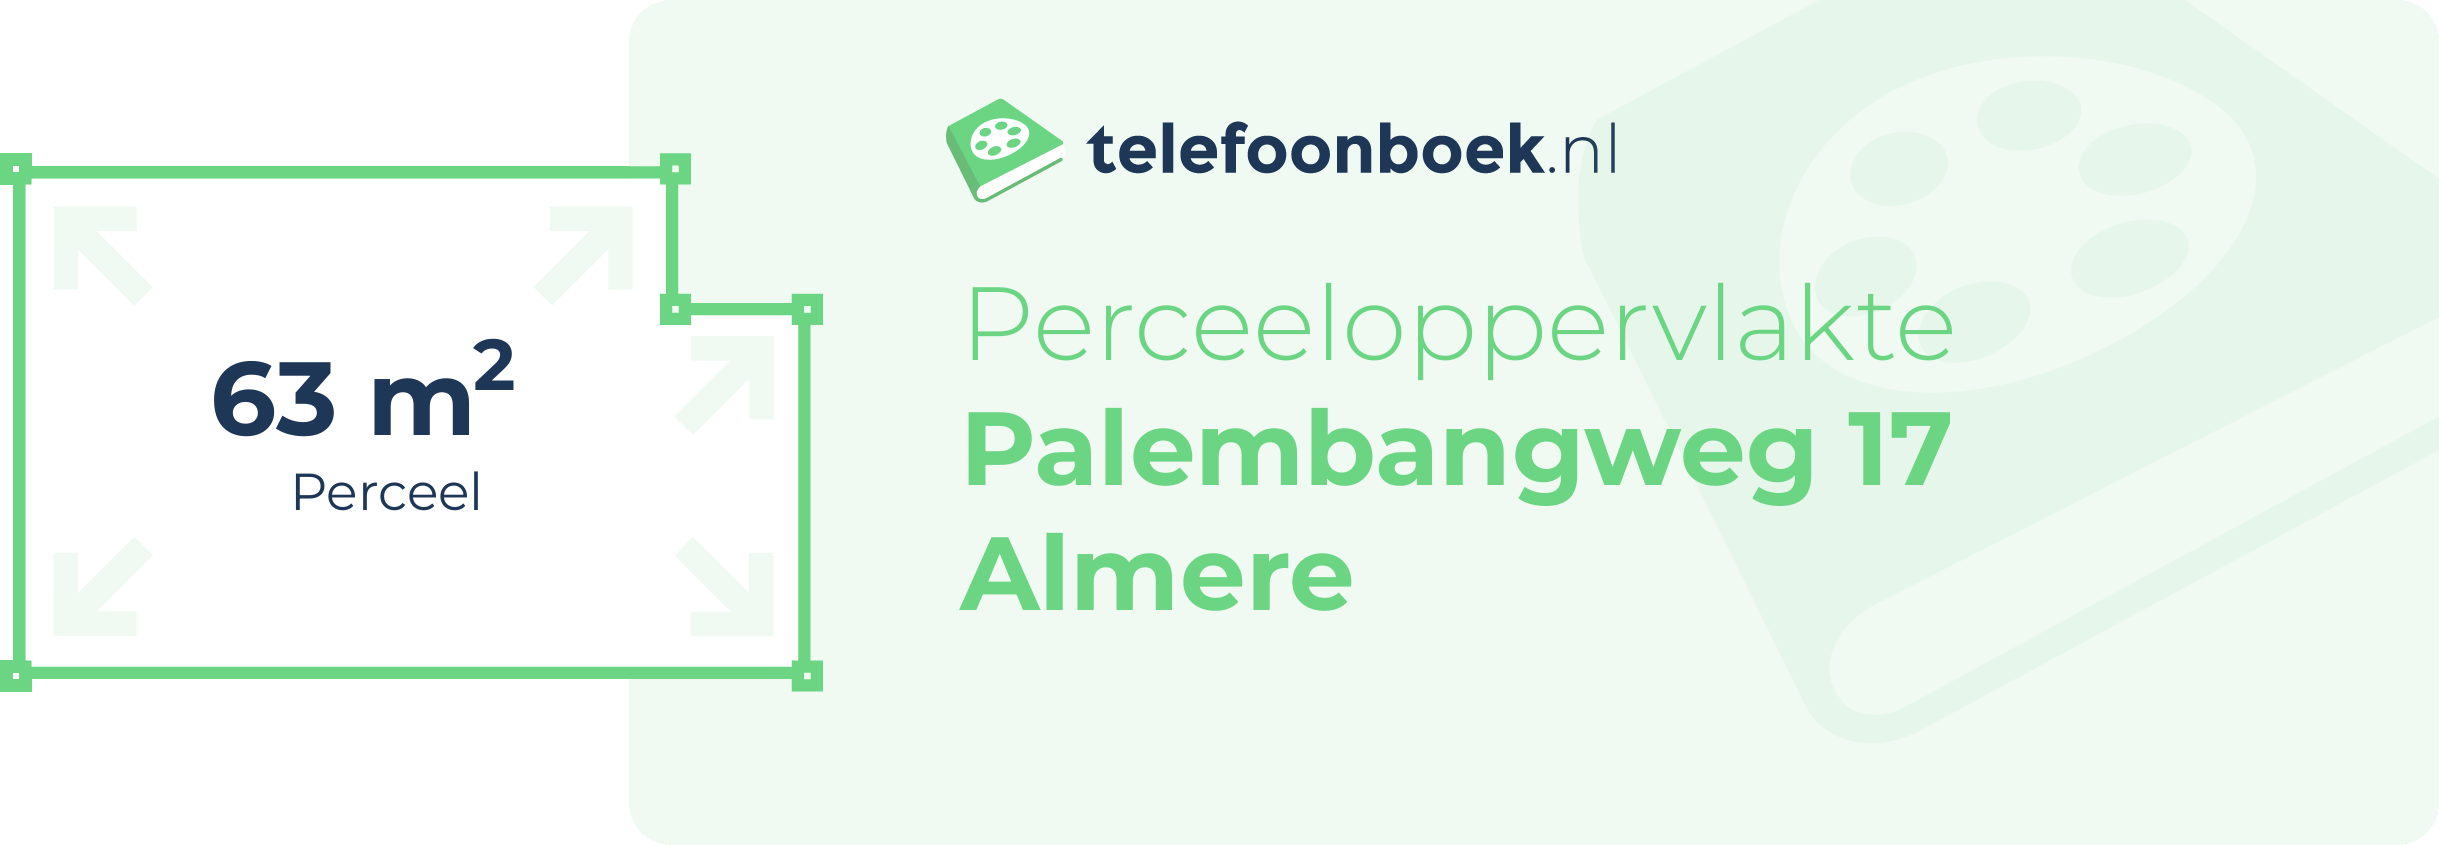 Perceeloppervlakte Palembangweg 17 Almere